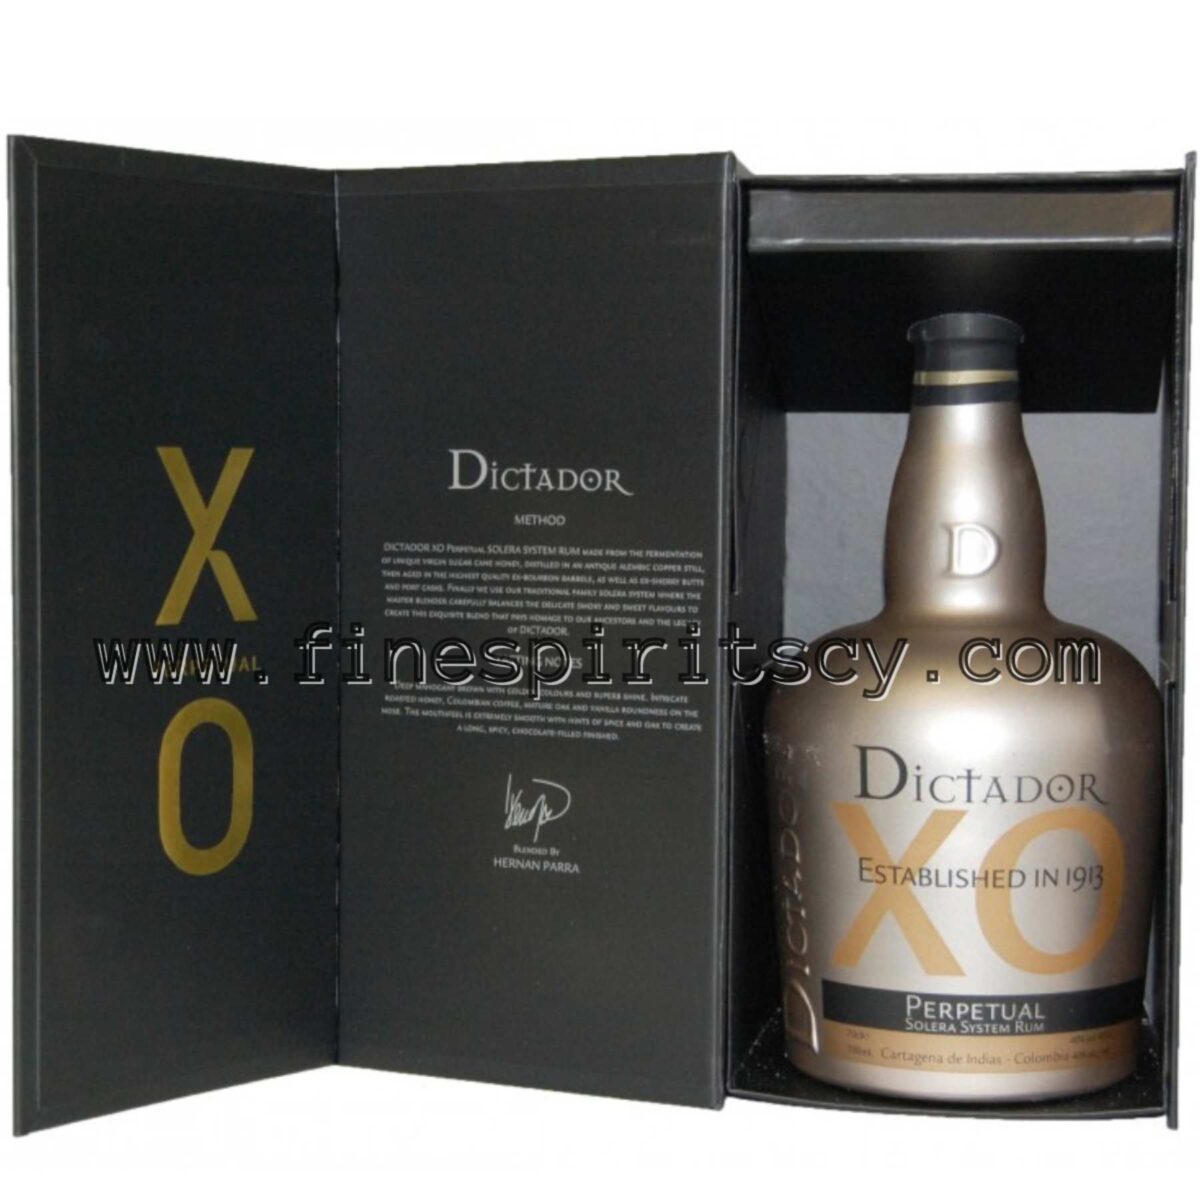 Dictador XO Extra Old Perpetual Rum Fine Spirits CY Cyprus